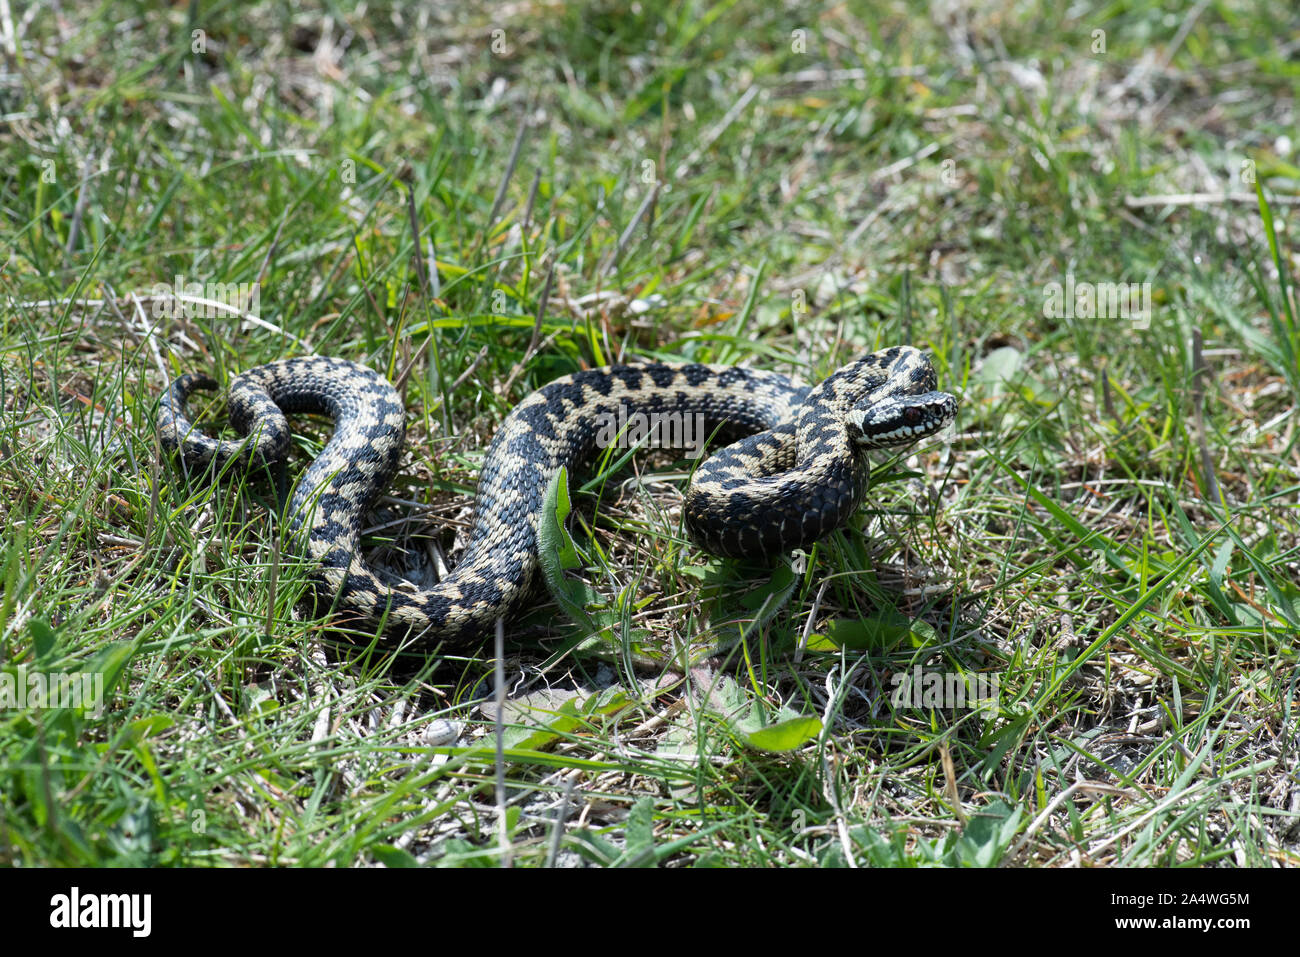 Adder Snake, Vipera berus, Samphire Hoe, Dover, KENT UK, curled up ready to strike, UK's only venomous snake Stock Photo